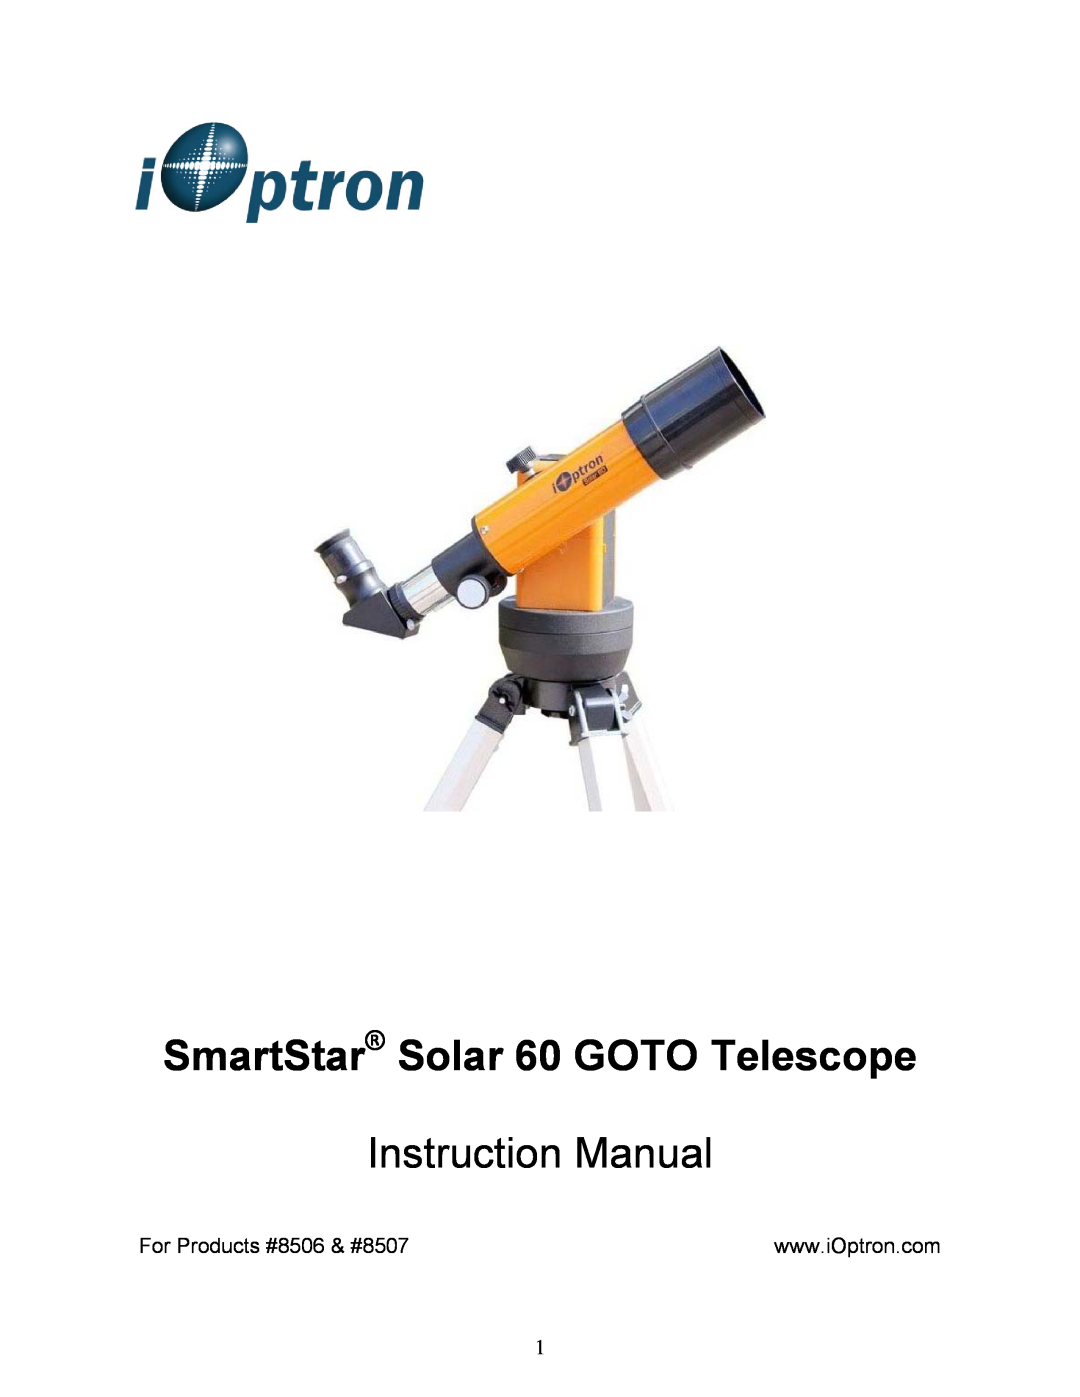 iOptron instruction manual For Products #8506 & #8507, SmartStar Solar 60 GOTO Telescope, Instruction Manual 